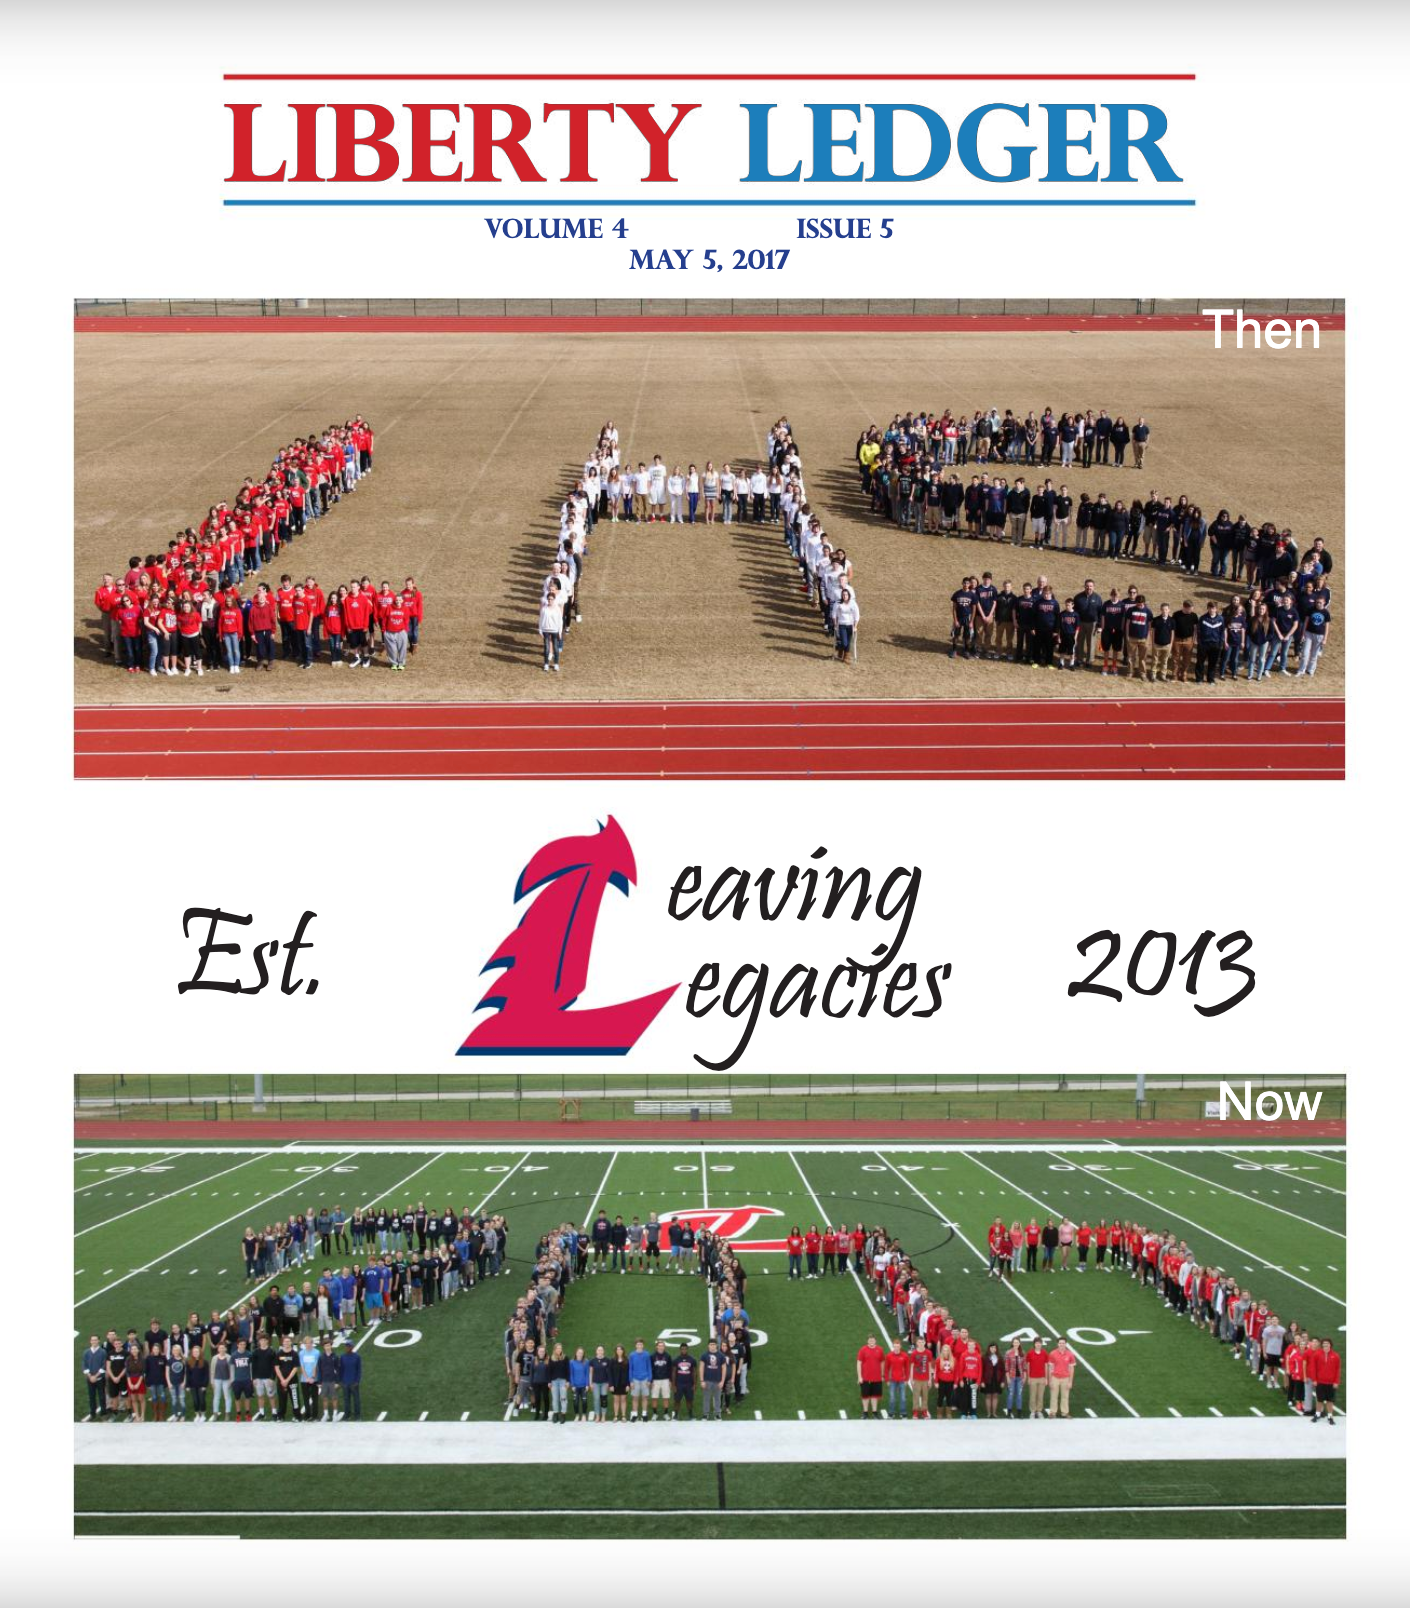 The Ledger Volume 4 Issue 5: Leaving Legacies